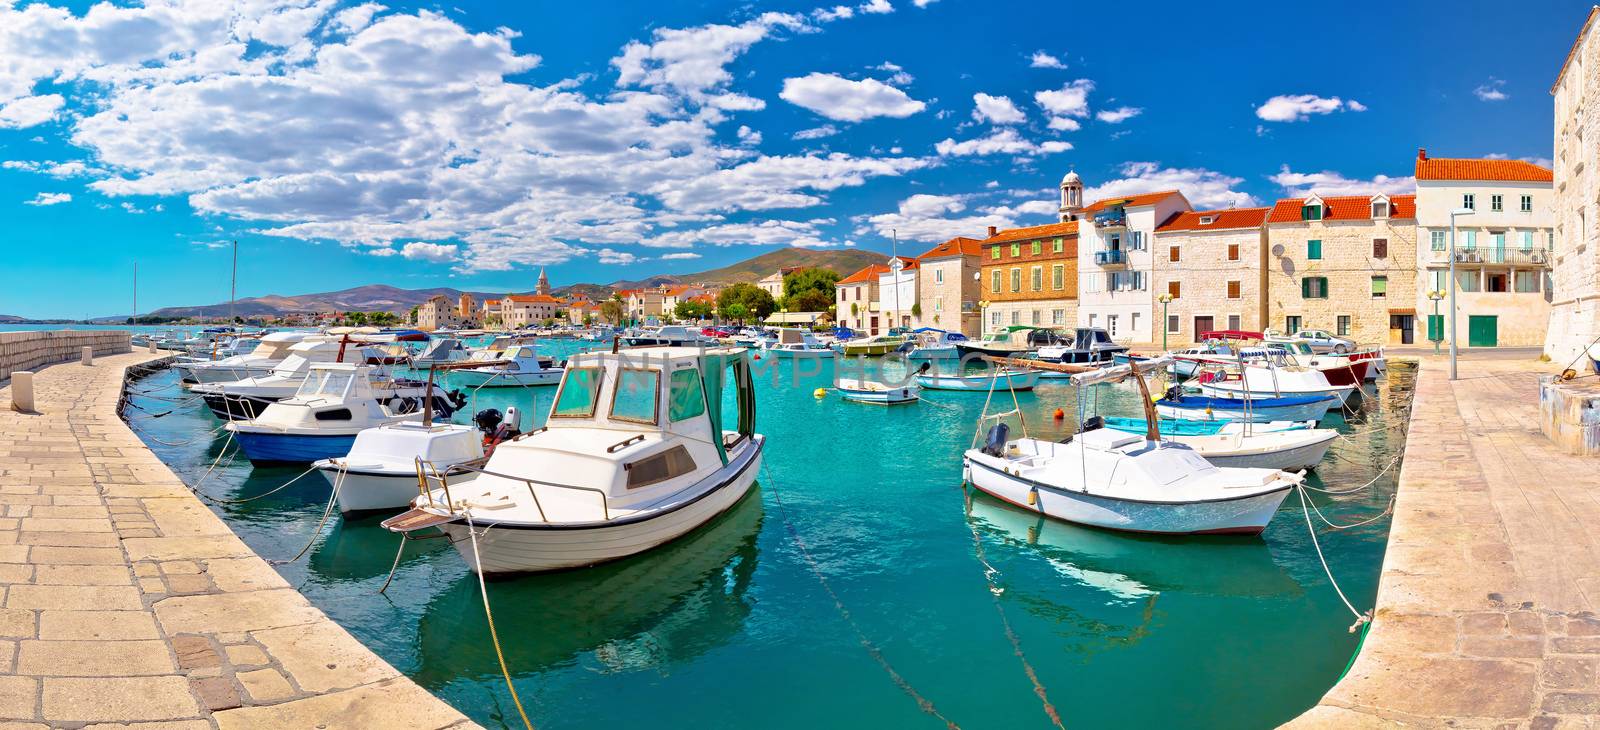 Kastel Novi turquoise harbor and historic architecture panoramic by xbrchx